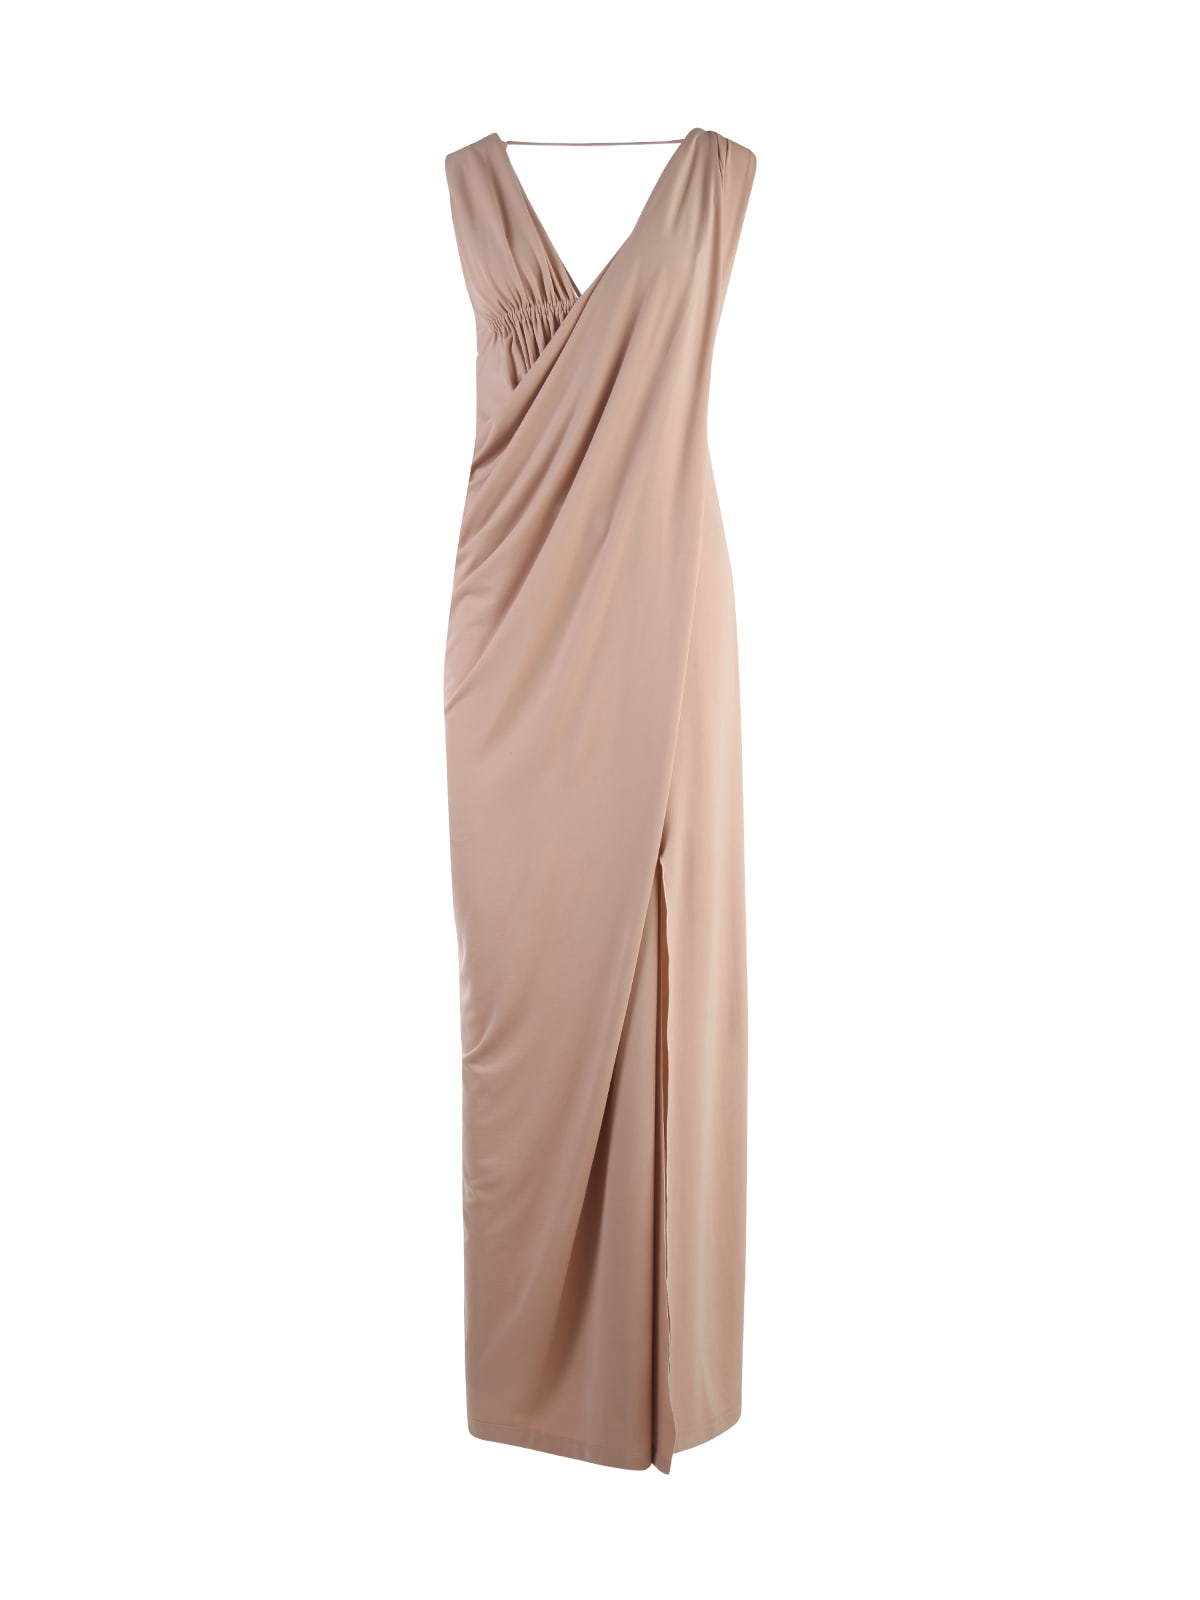 Alberta Ferretti Organzino Eco Friendly Viscose Sleeveless Long Dress